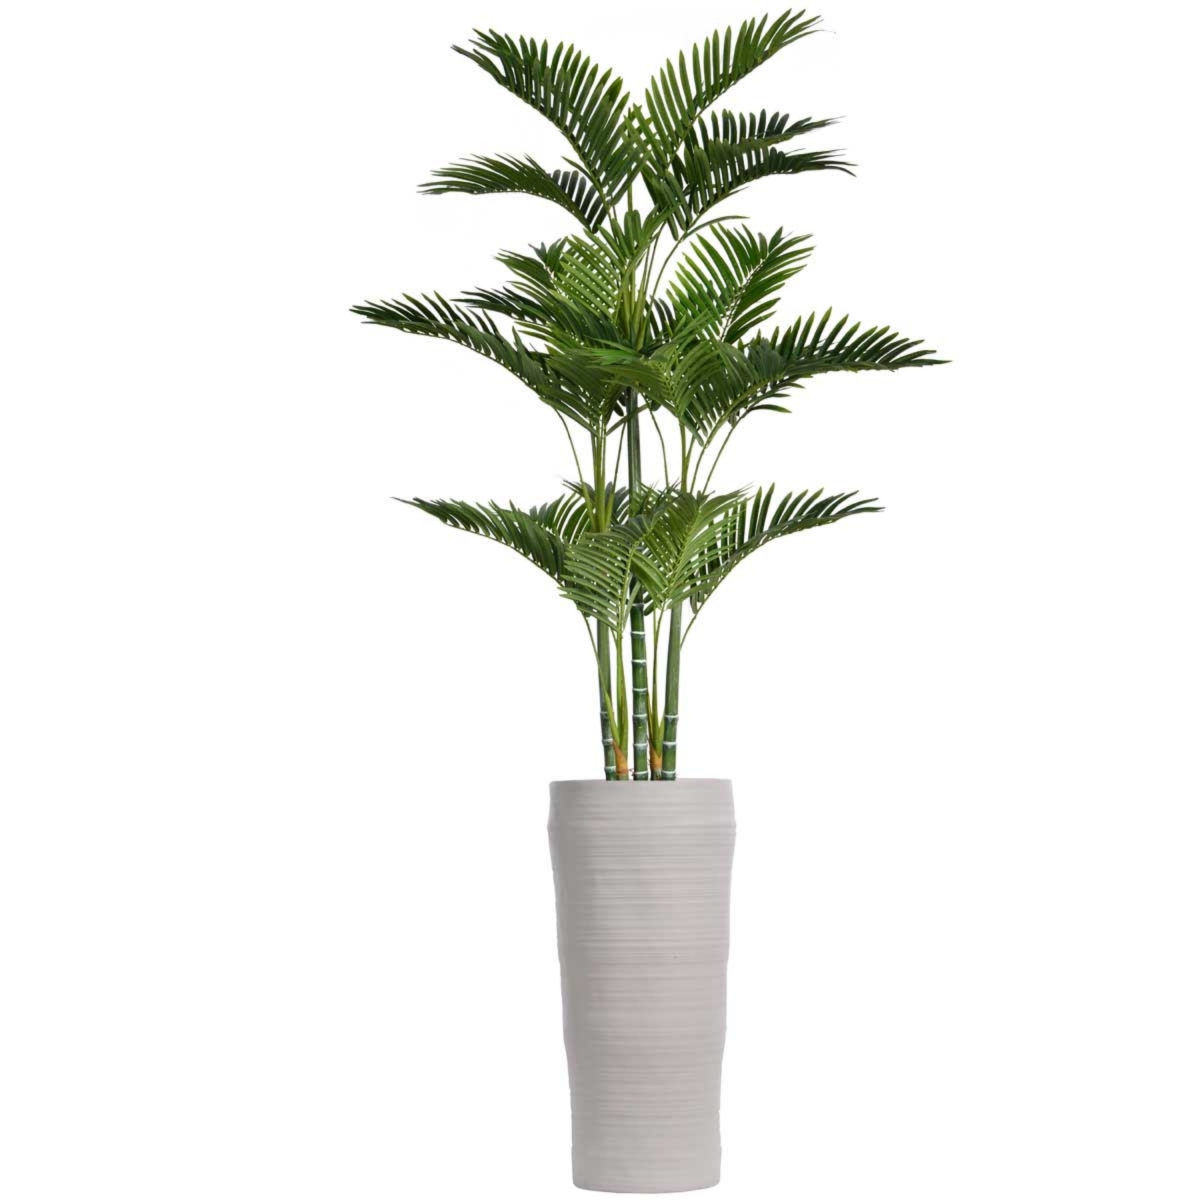 Vhx132218 81 In. Tall Palm Tree With Burlap Kit & Fiberstone Planter